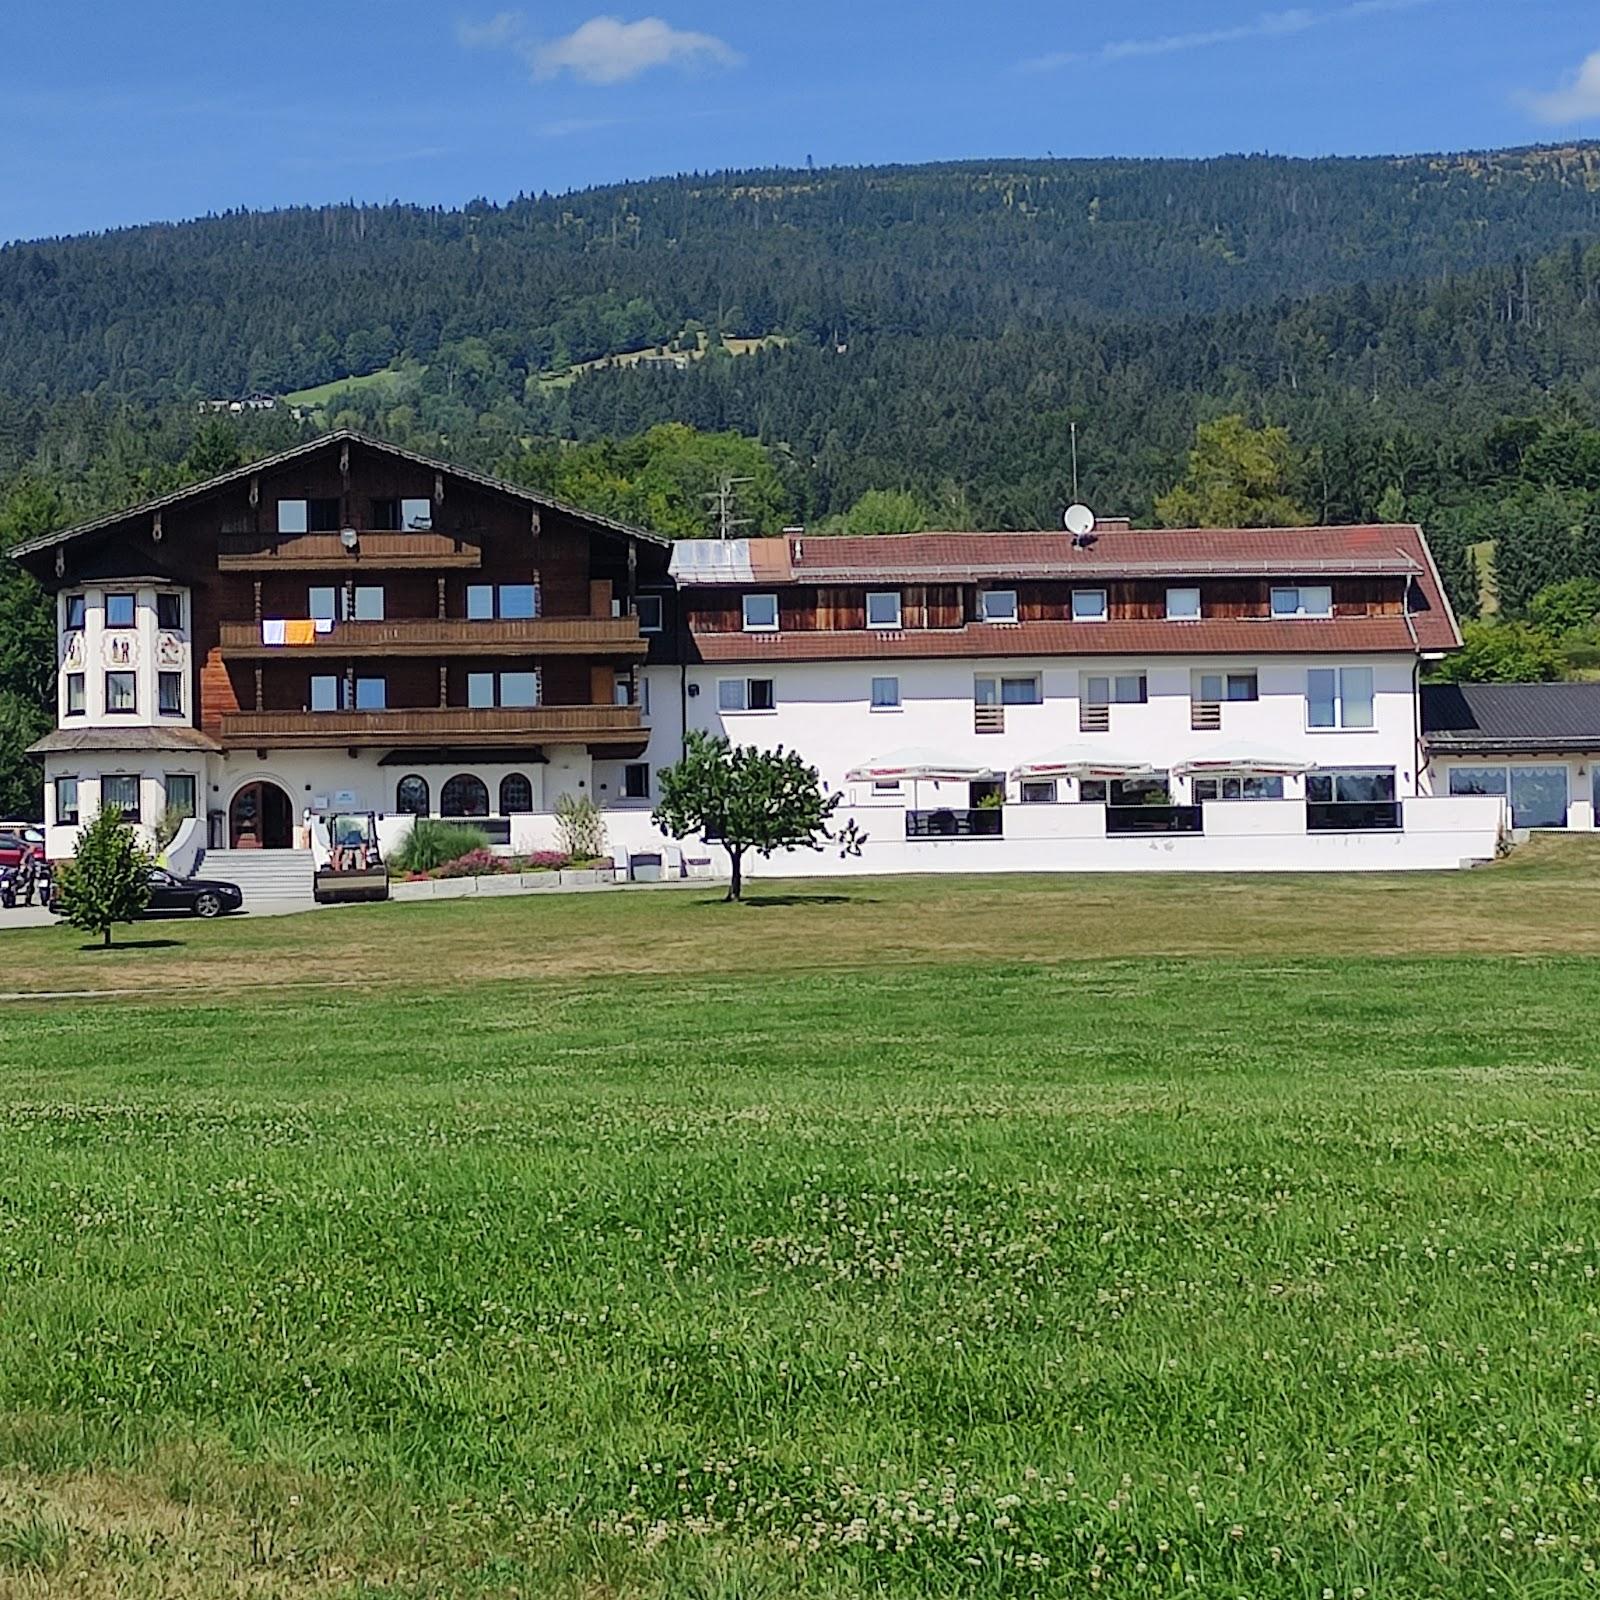 Restaurant "Hotel Bergland-Hof" in Neureichenau